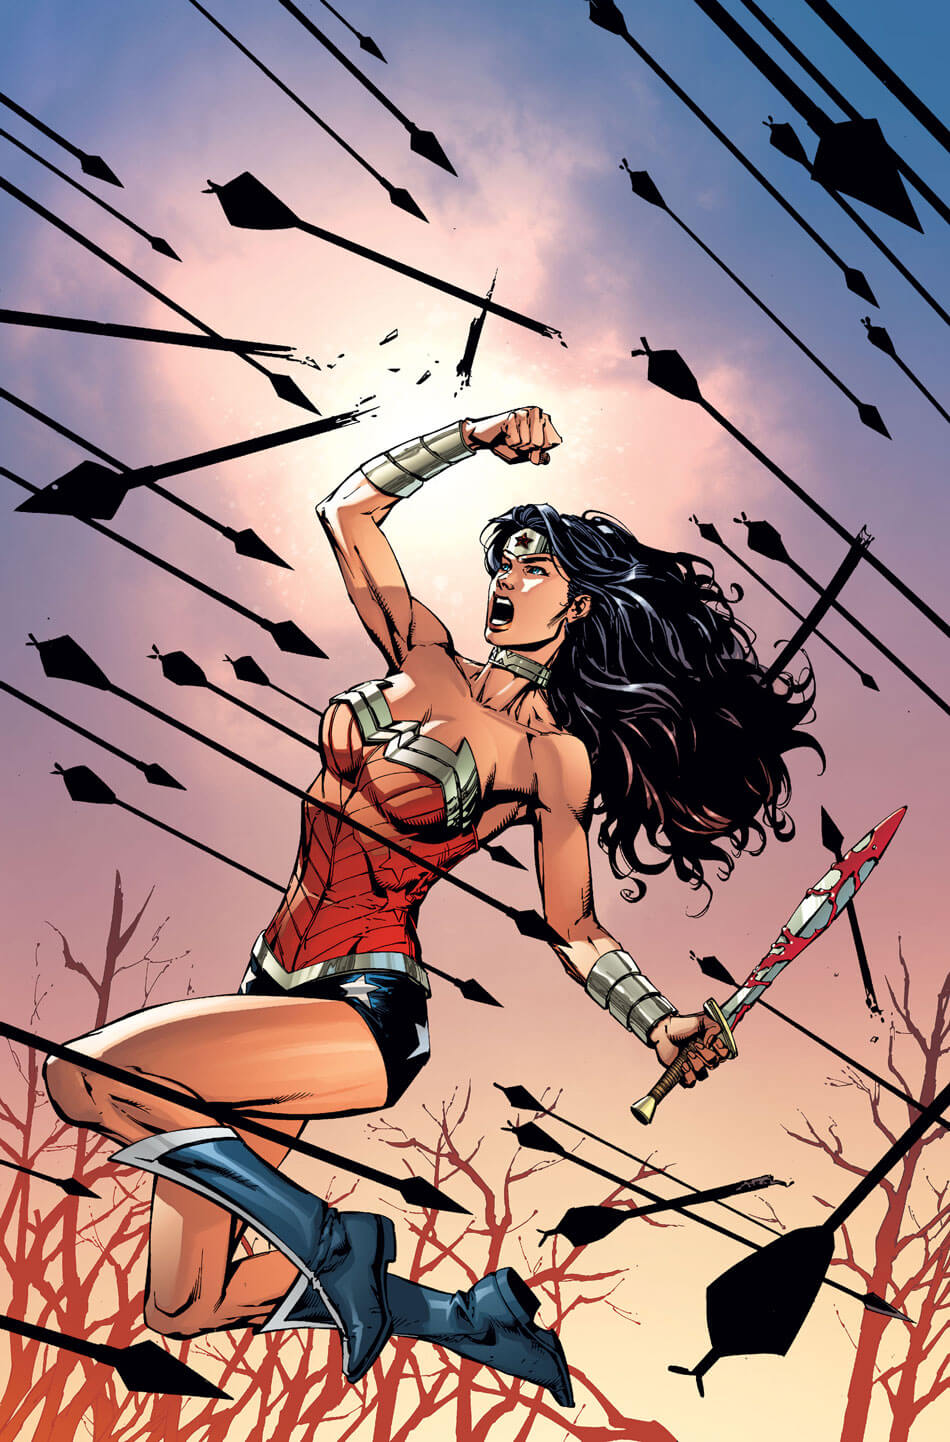 Wonder-Woman-#52-variant-cover-by-David-Finch-and-Matt-Banning